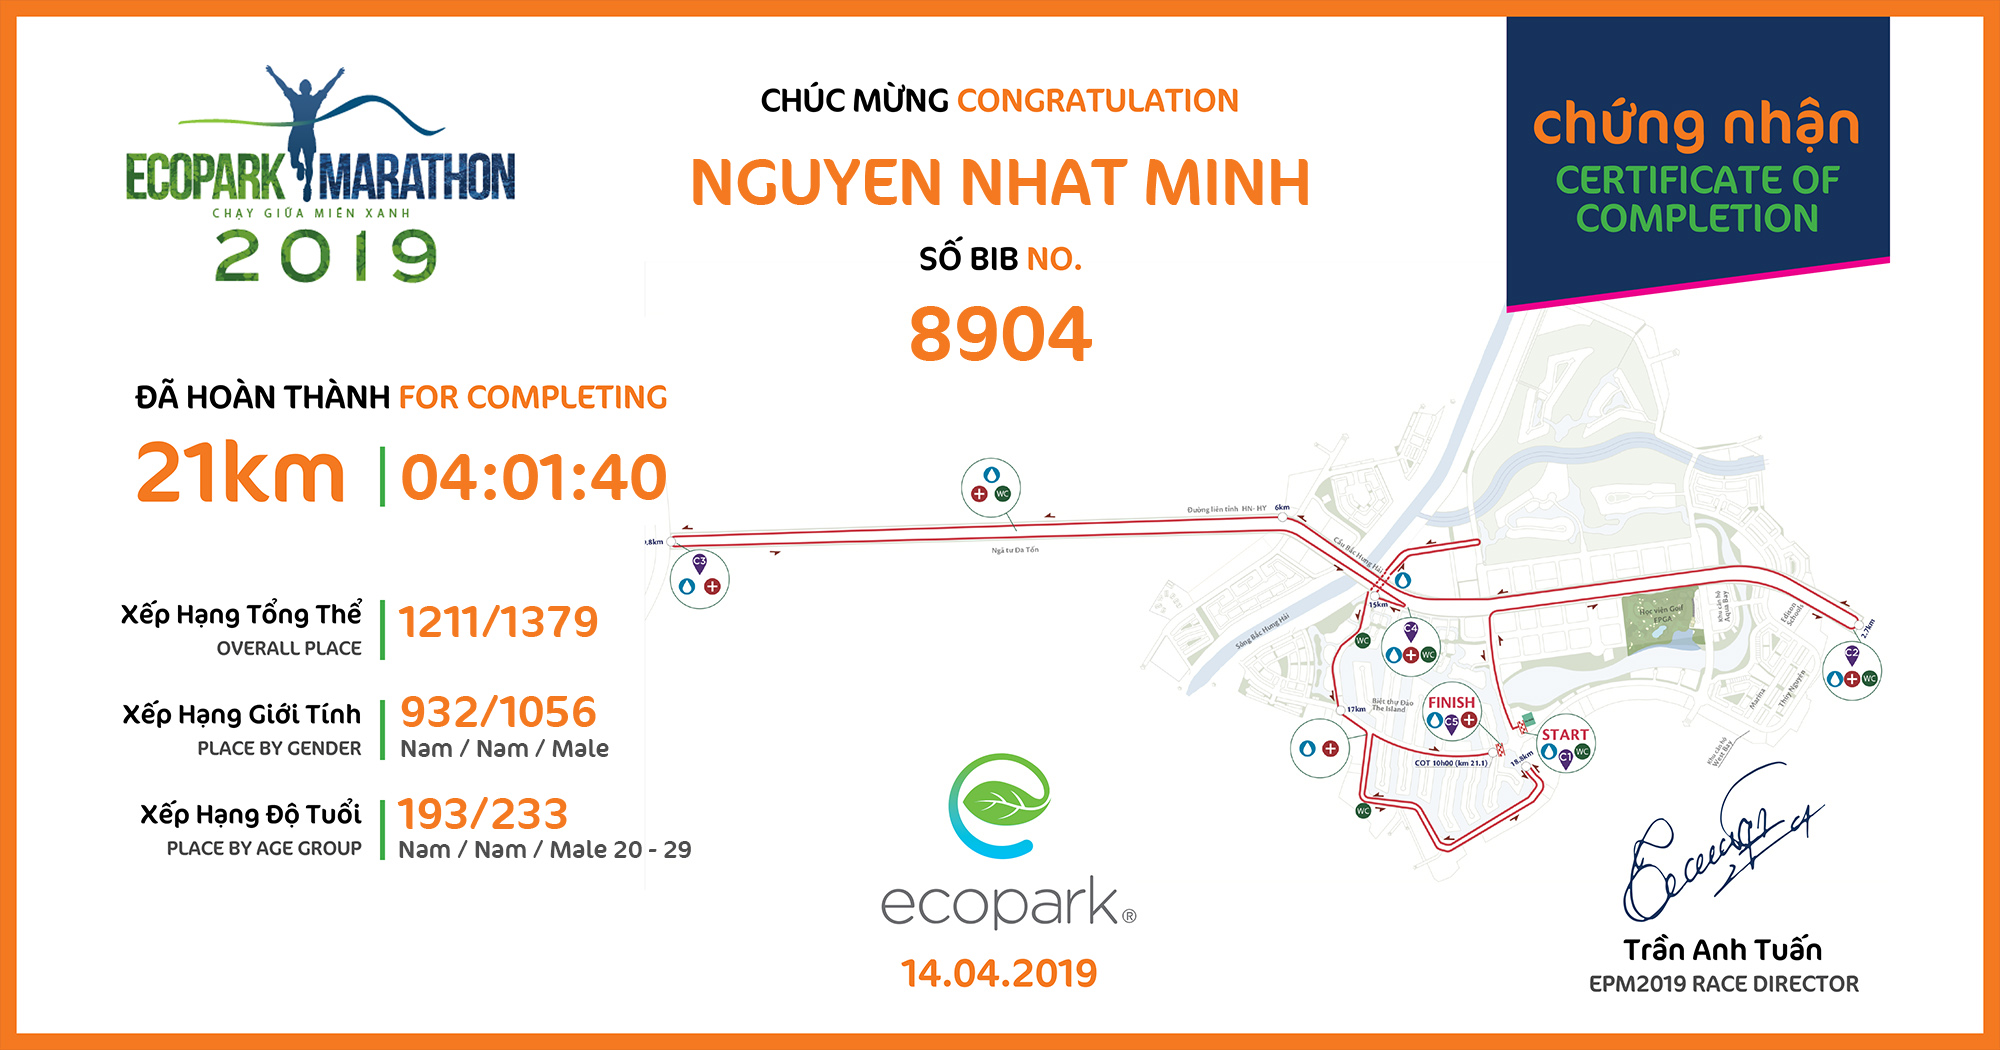 8904 - NGUYEN NHAT MINH